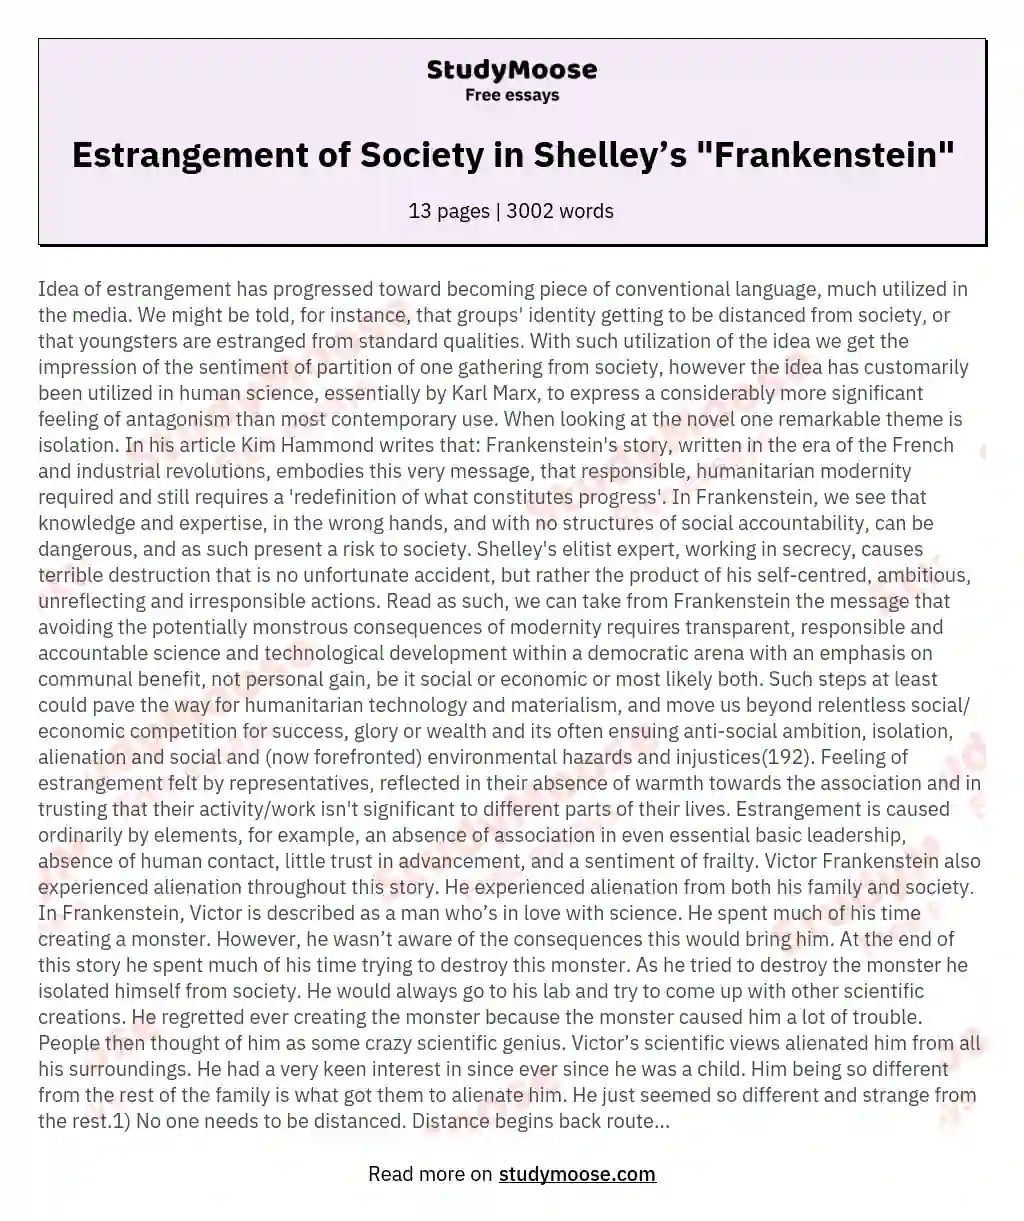 Estrangement of Society in Shelley’s "Frankenstein" essay